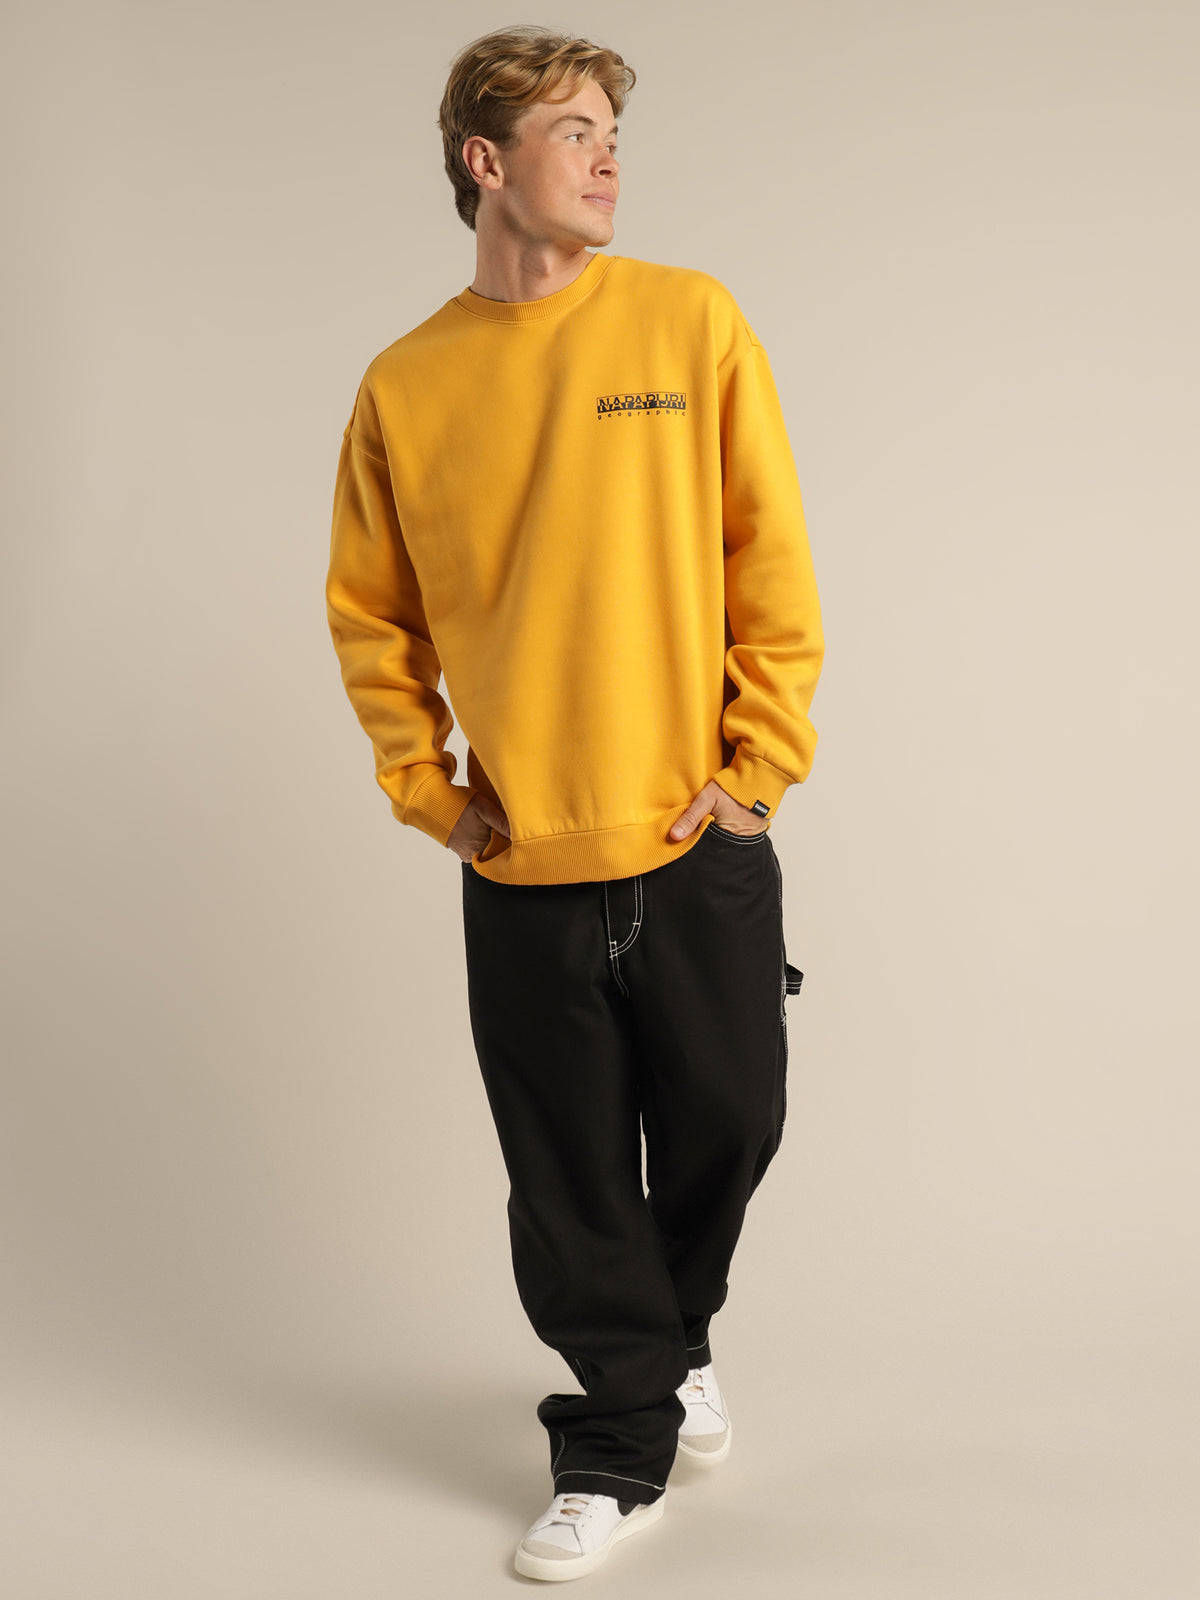 B Yoik C Sweatshirt in Yellow